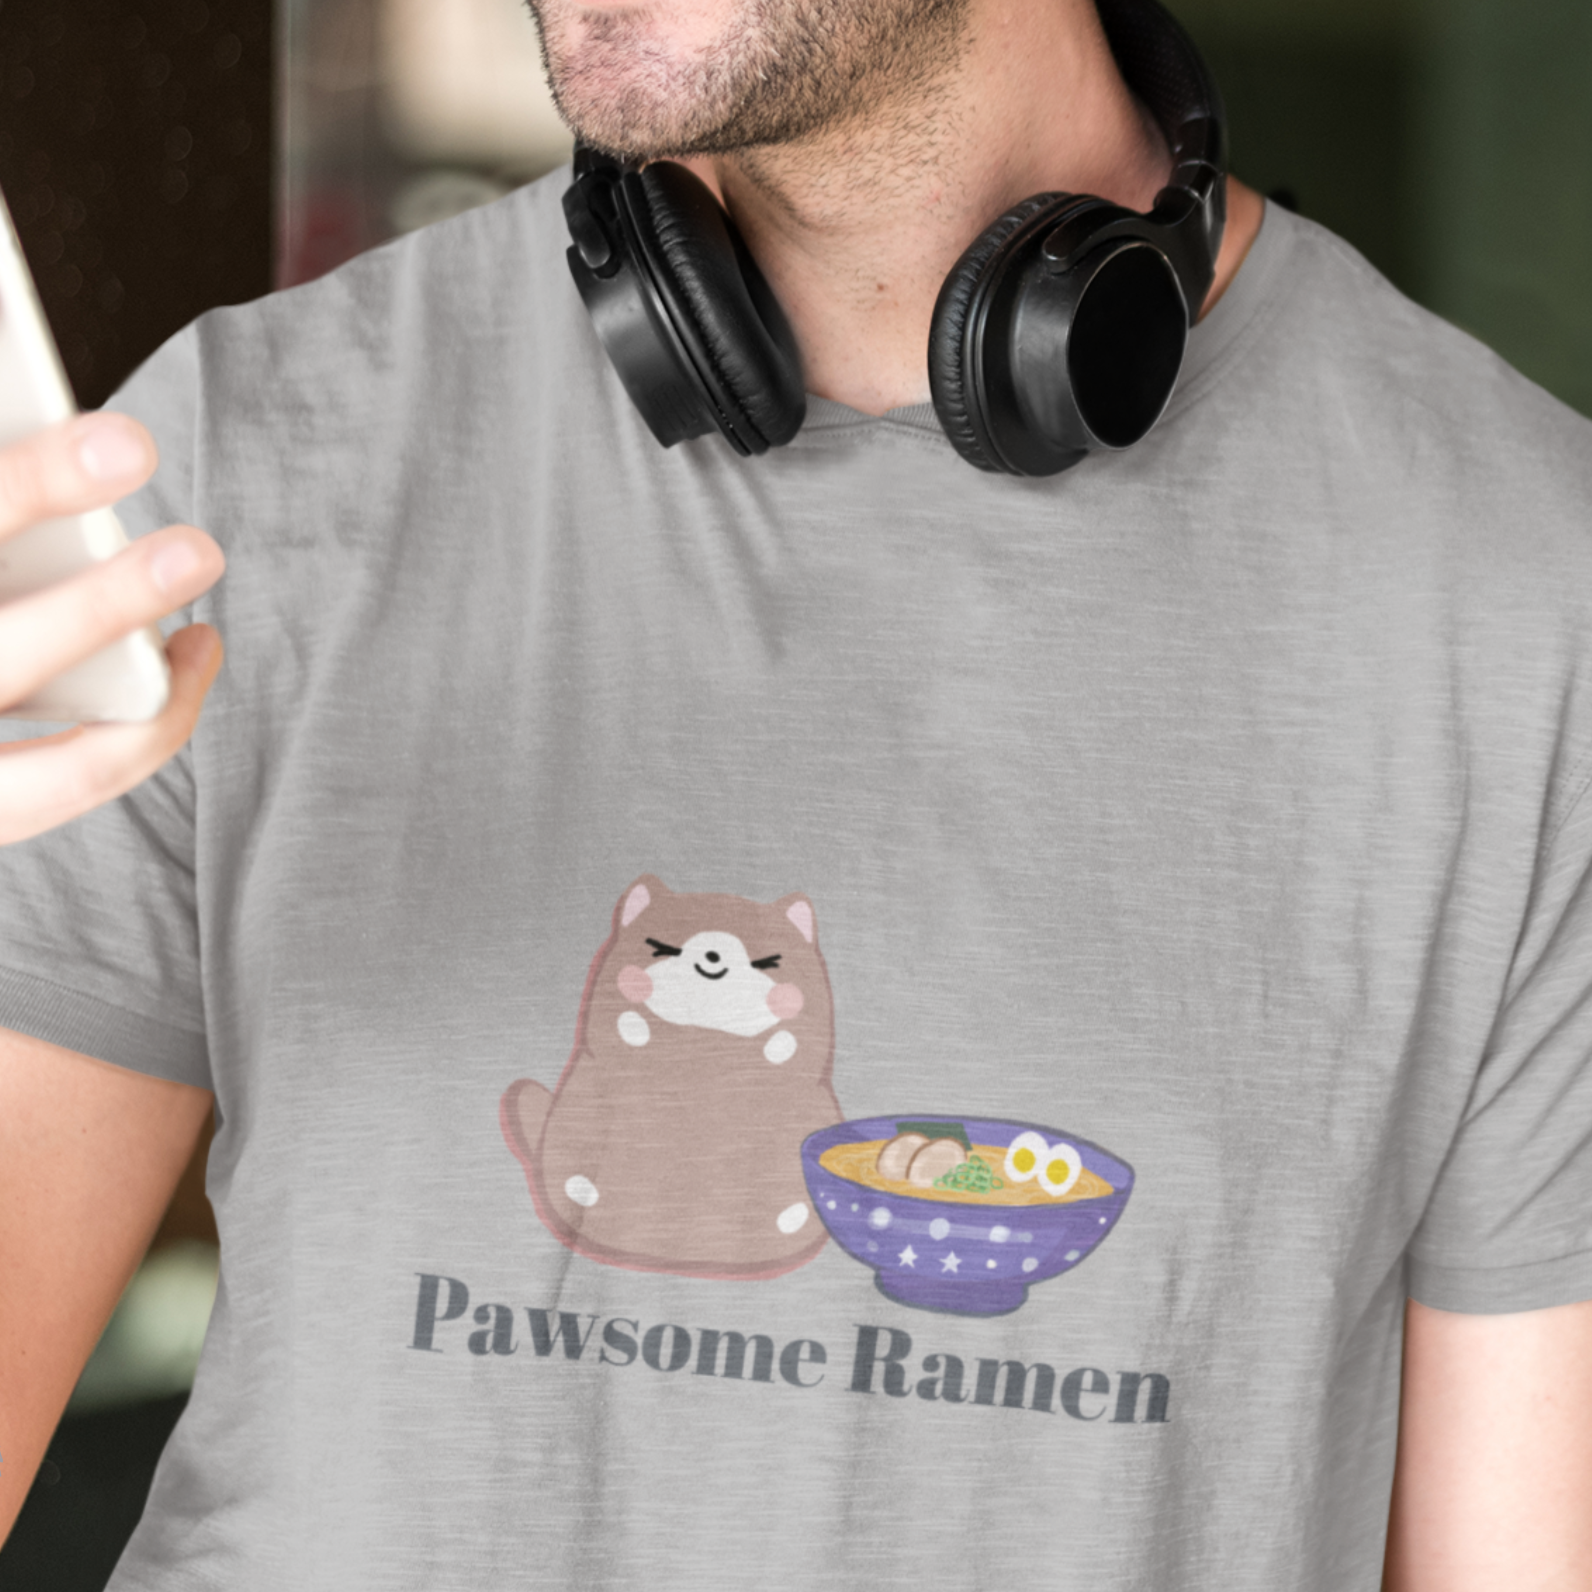 Ramen T-shirt: Pawsome Ramen Adventure with a Chubby Mochi Cat - Japanese Foodie Shirt featuring Cute Ramen Art